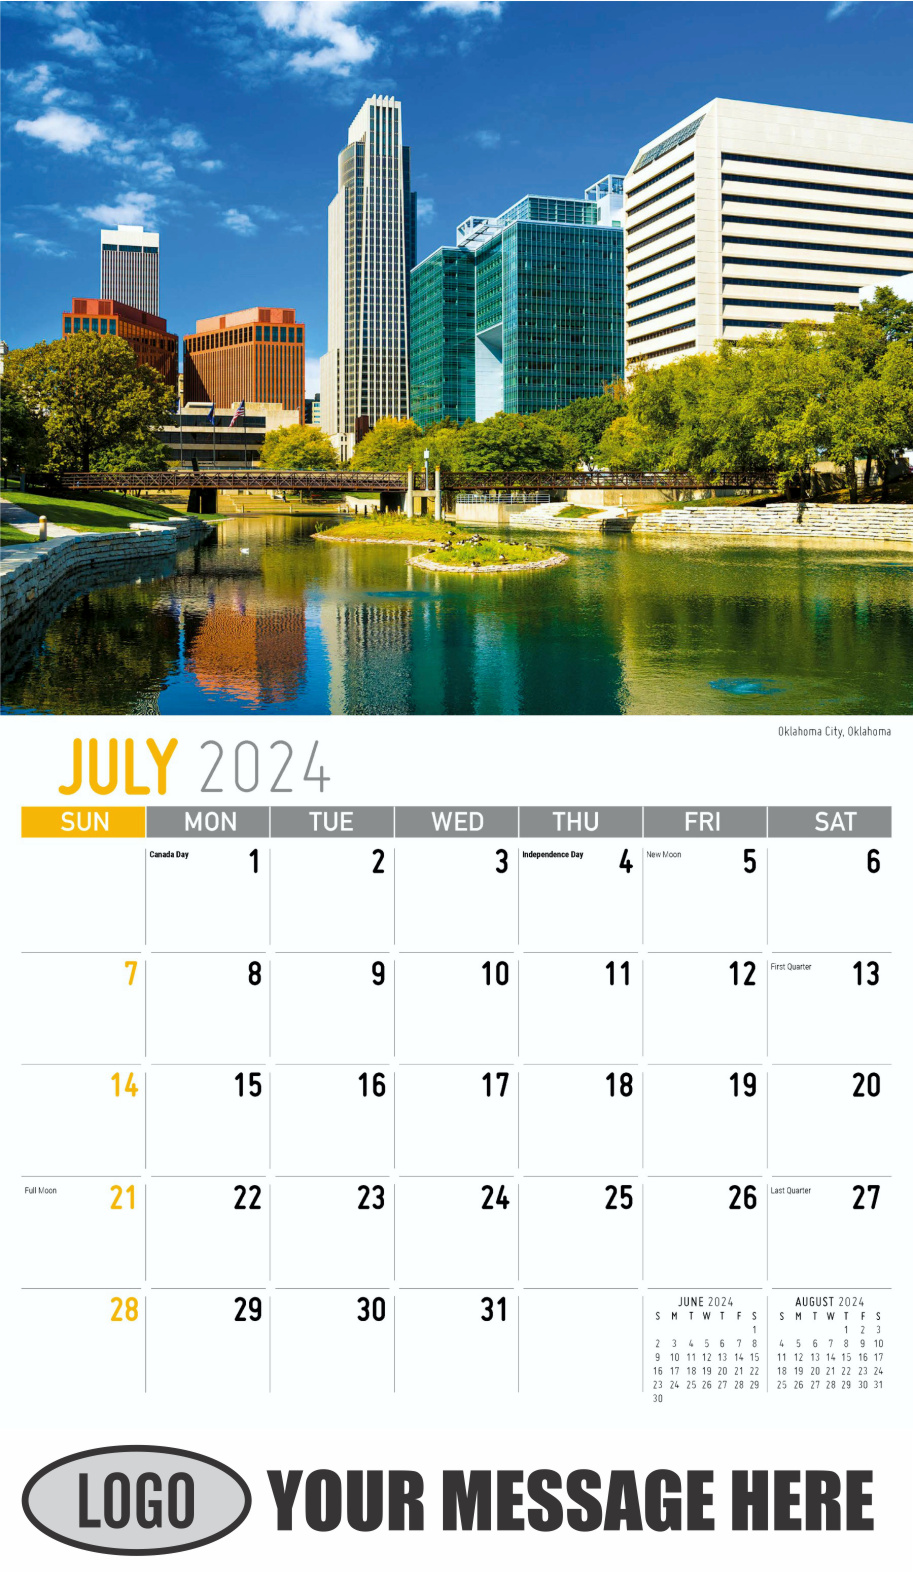 Scenes of America 2024 Business Advertising Wall Calendar - July